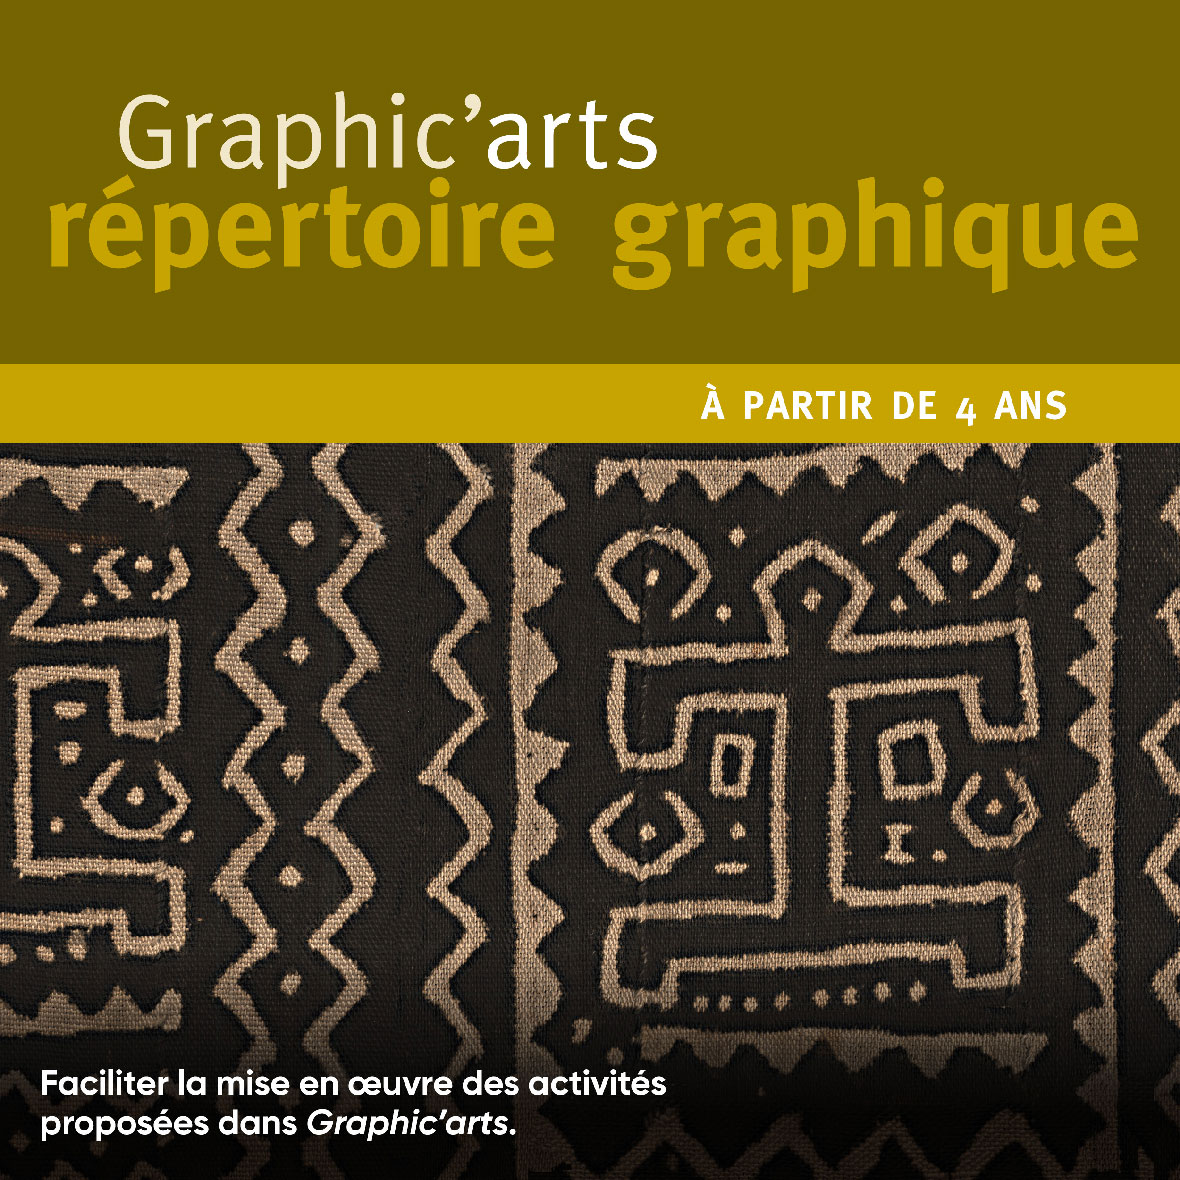 Graphic arts repertoire graphique miniature 1 acces editions